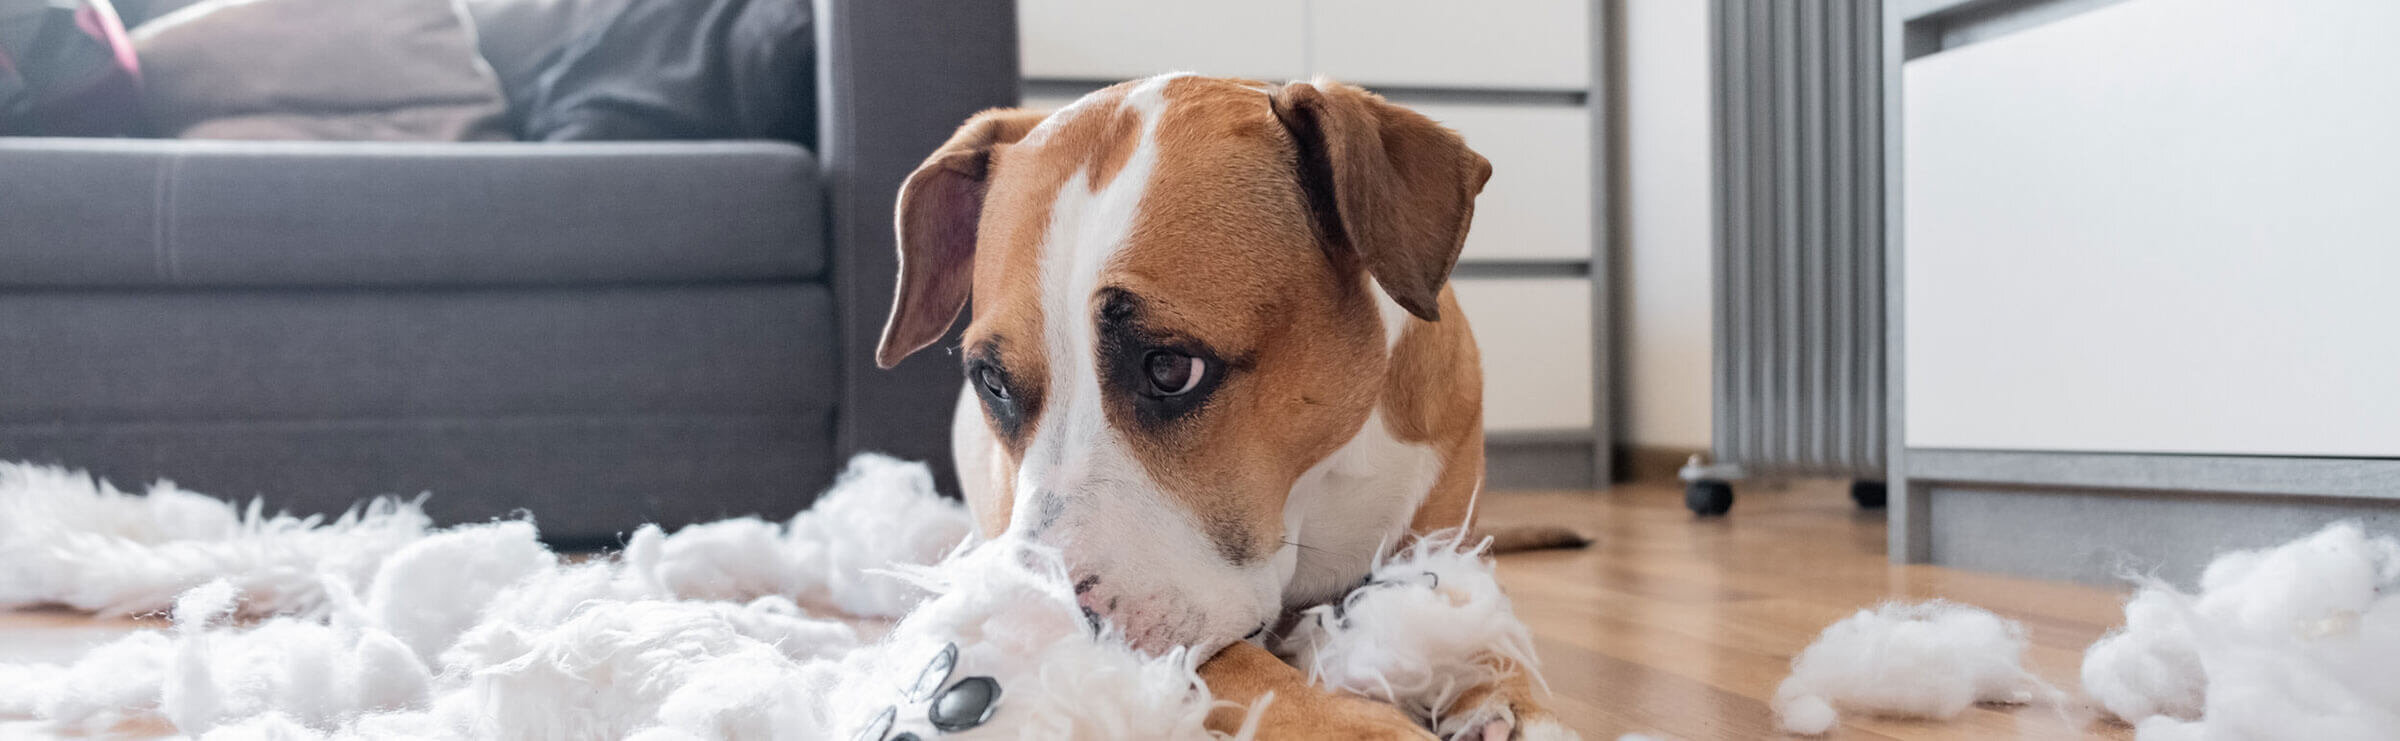 Dog tearing apart stuffed animal